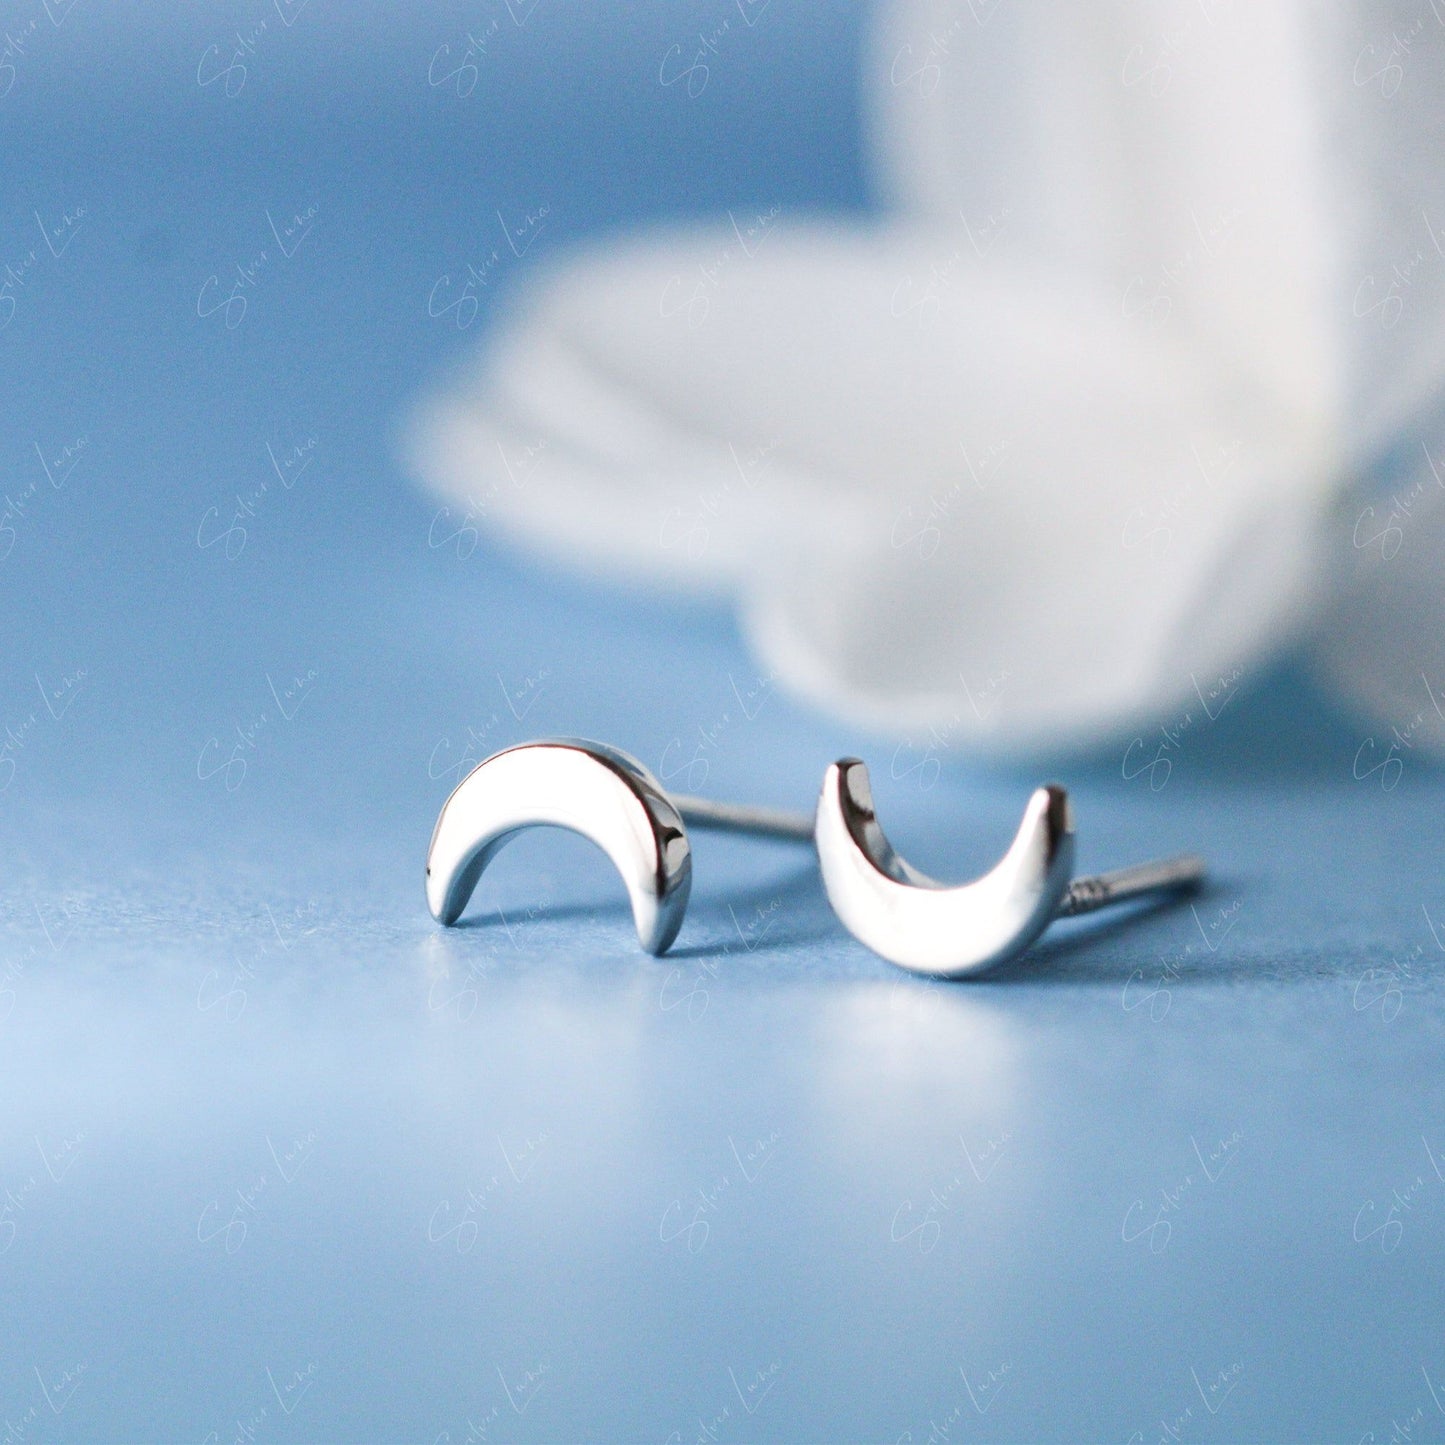 Tiny silver moon stud earrings